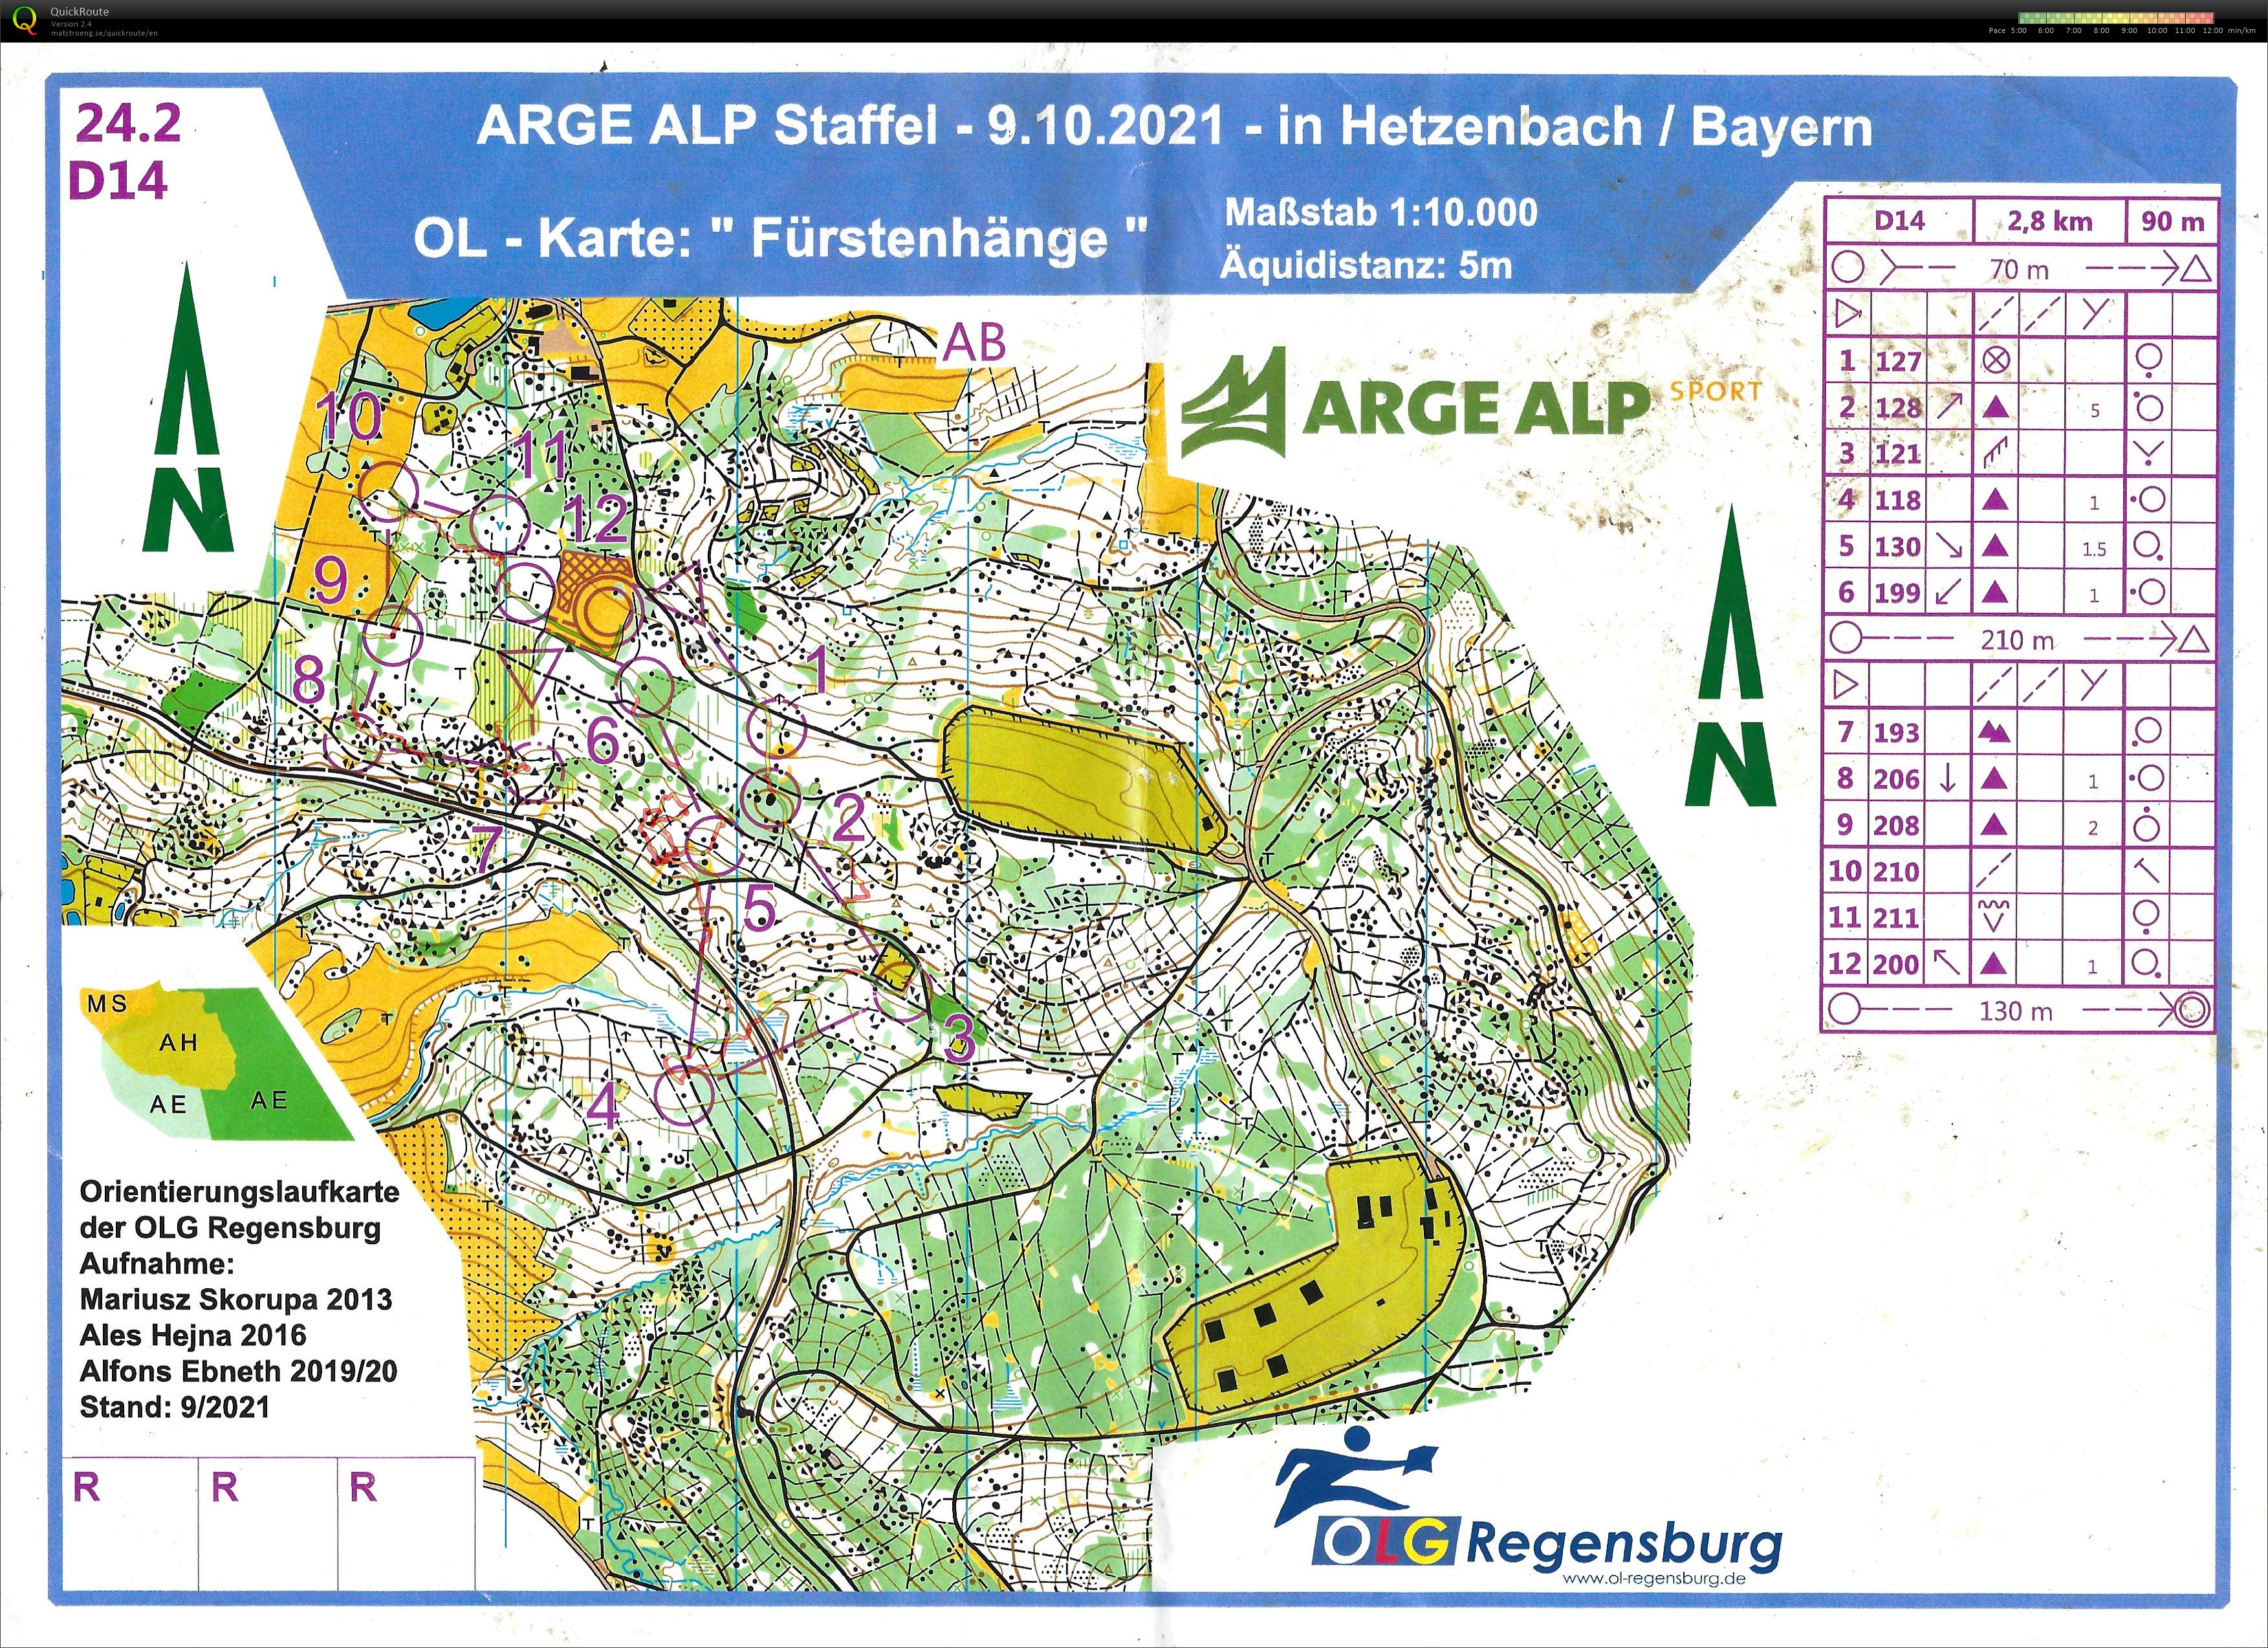 Arge Alp 2021 Regensburg (2021-10-09)